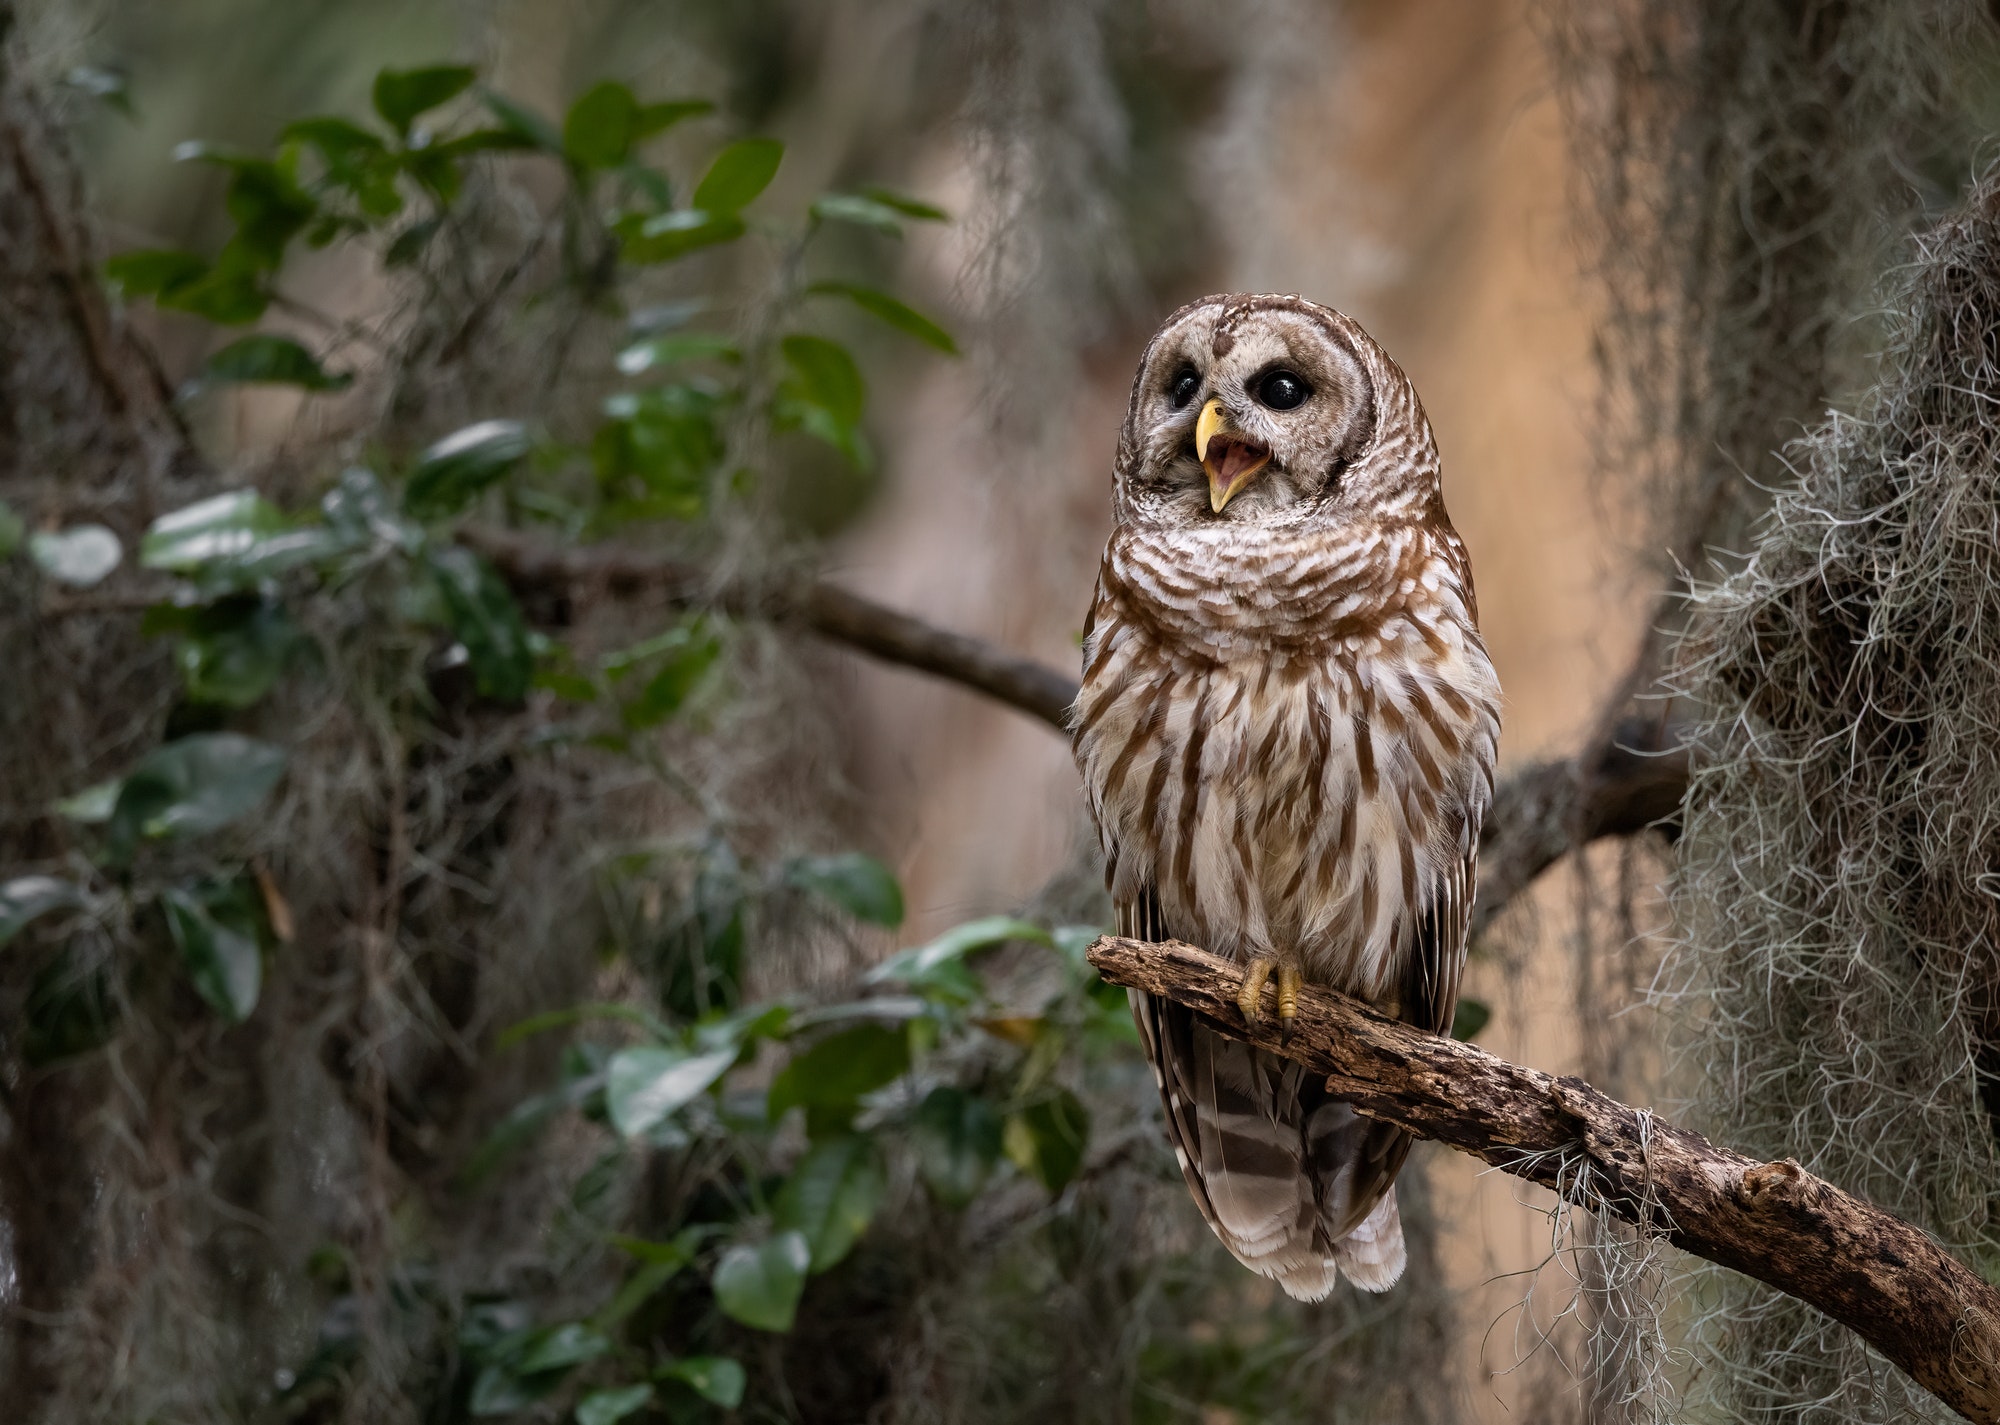 Barred Owl in Florida